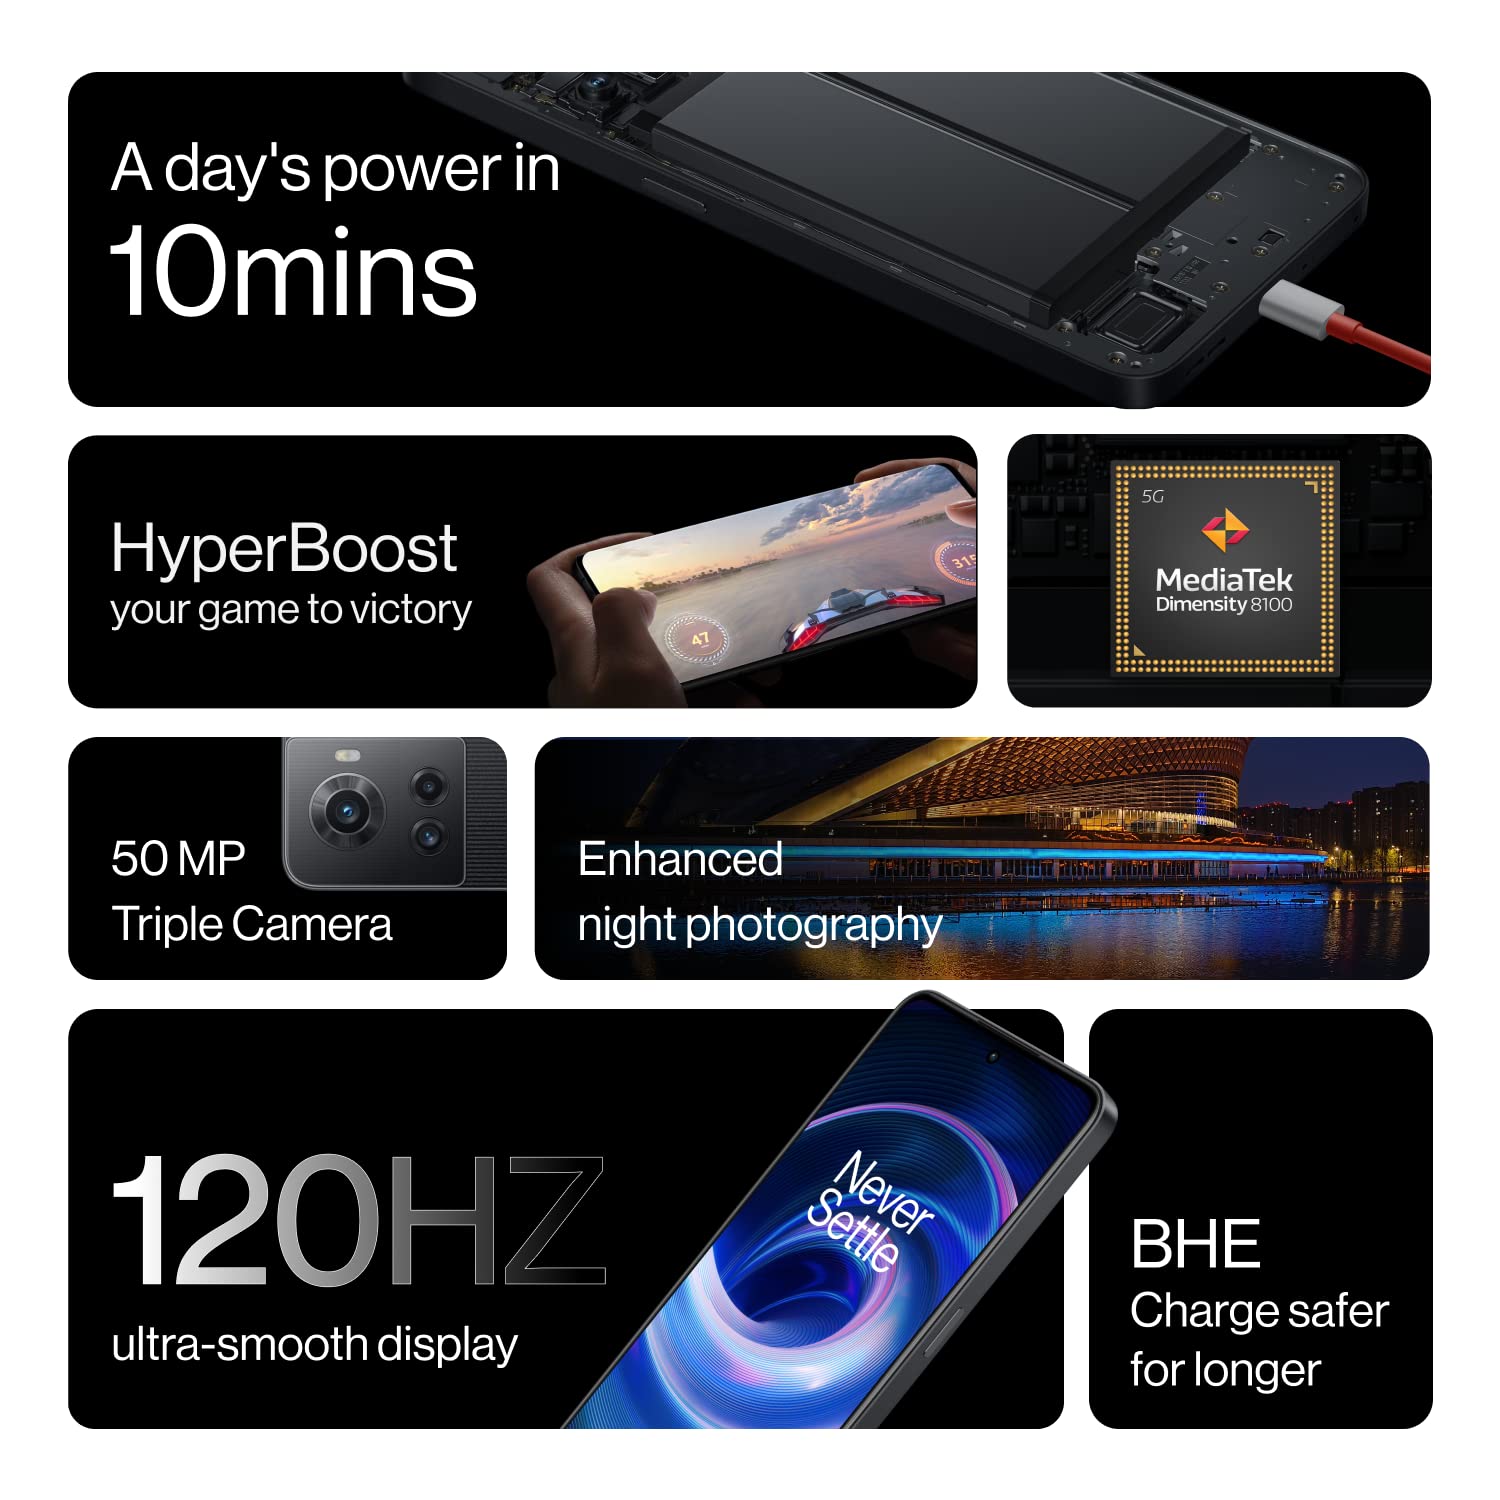 OnePlus 10R 5G (Sierra Black, 128GB) (8GB RAM)